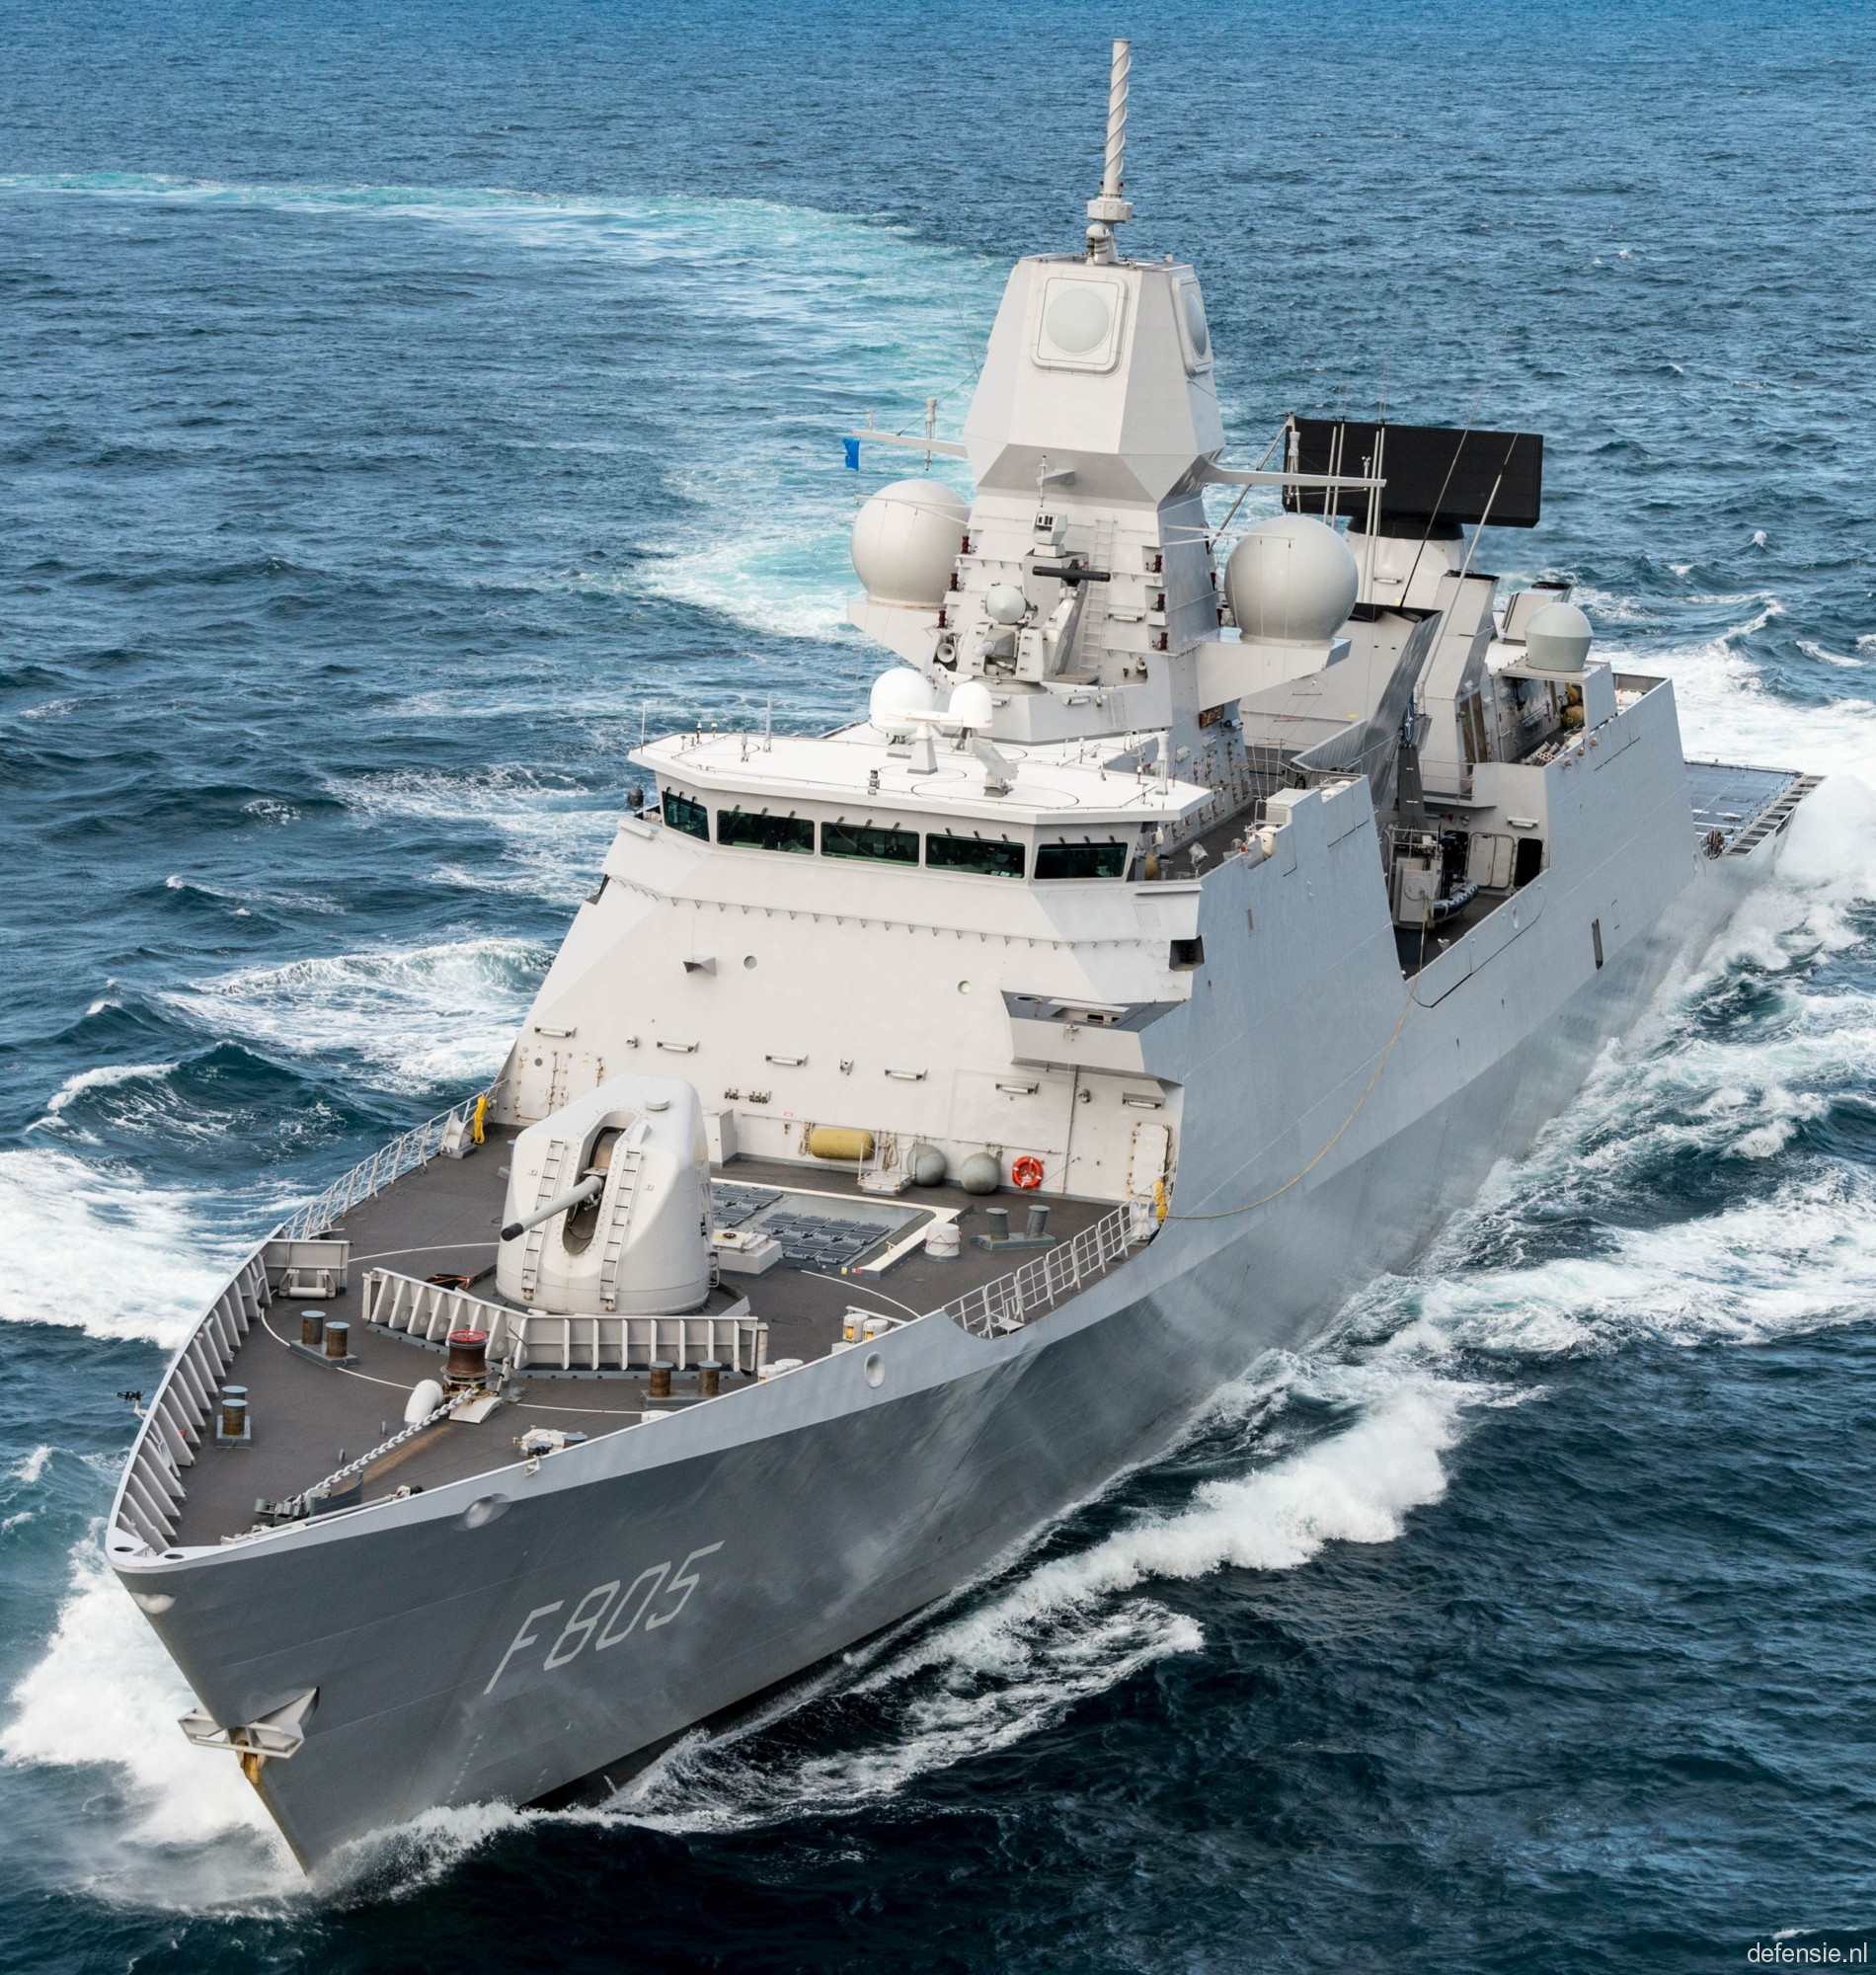 f-805 hnlms evertsen guided missile frigate ffg lcf royal netherlands navy 18